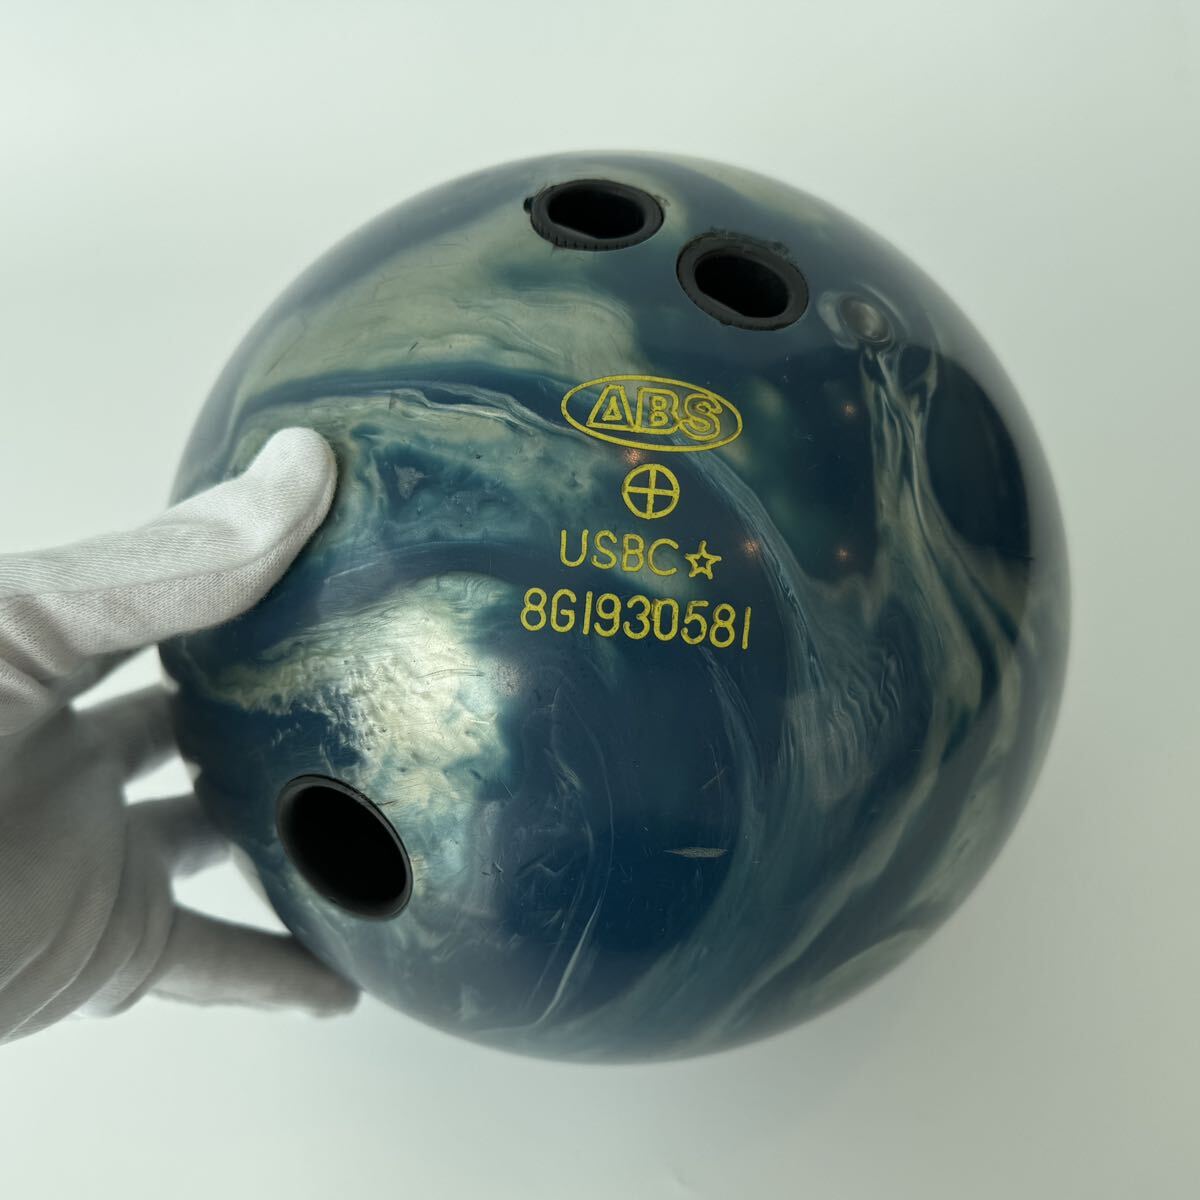 3807 ABS PRO-AM боулинг bo- кольцо обувь лампочка мяч сумка комплект с роликами 